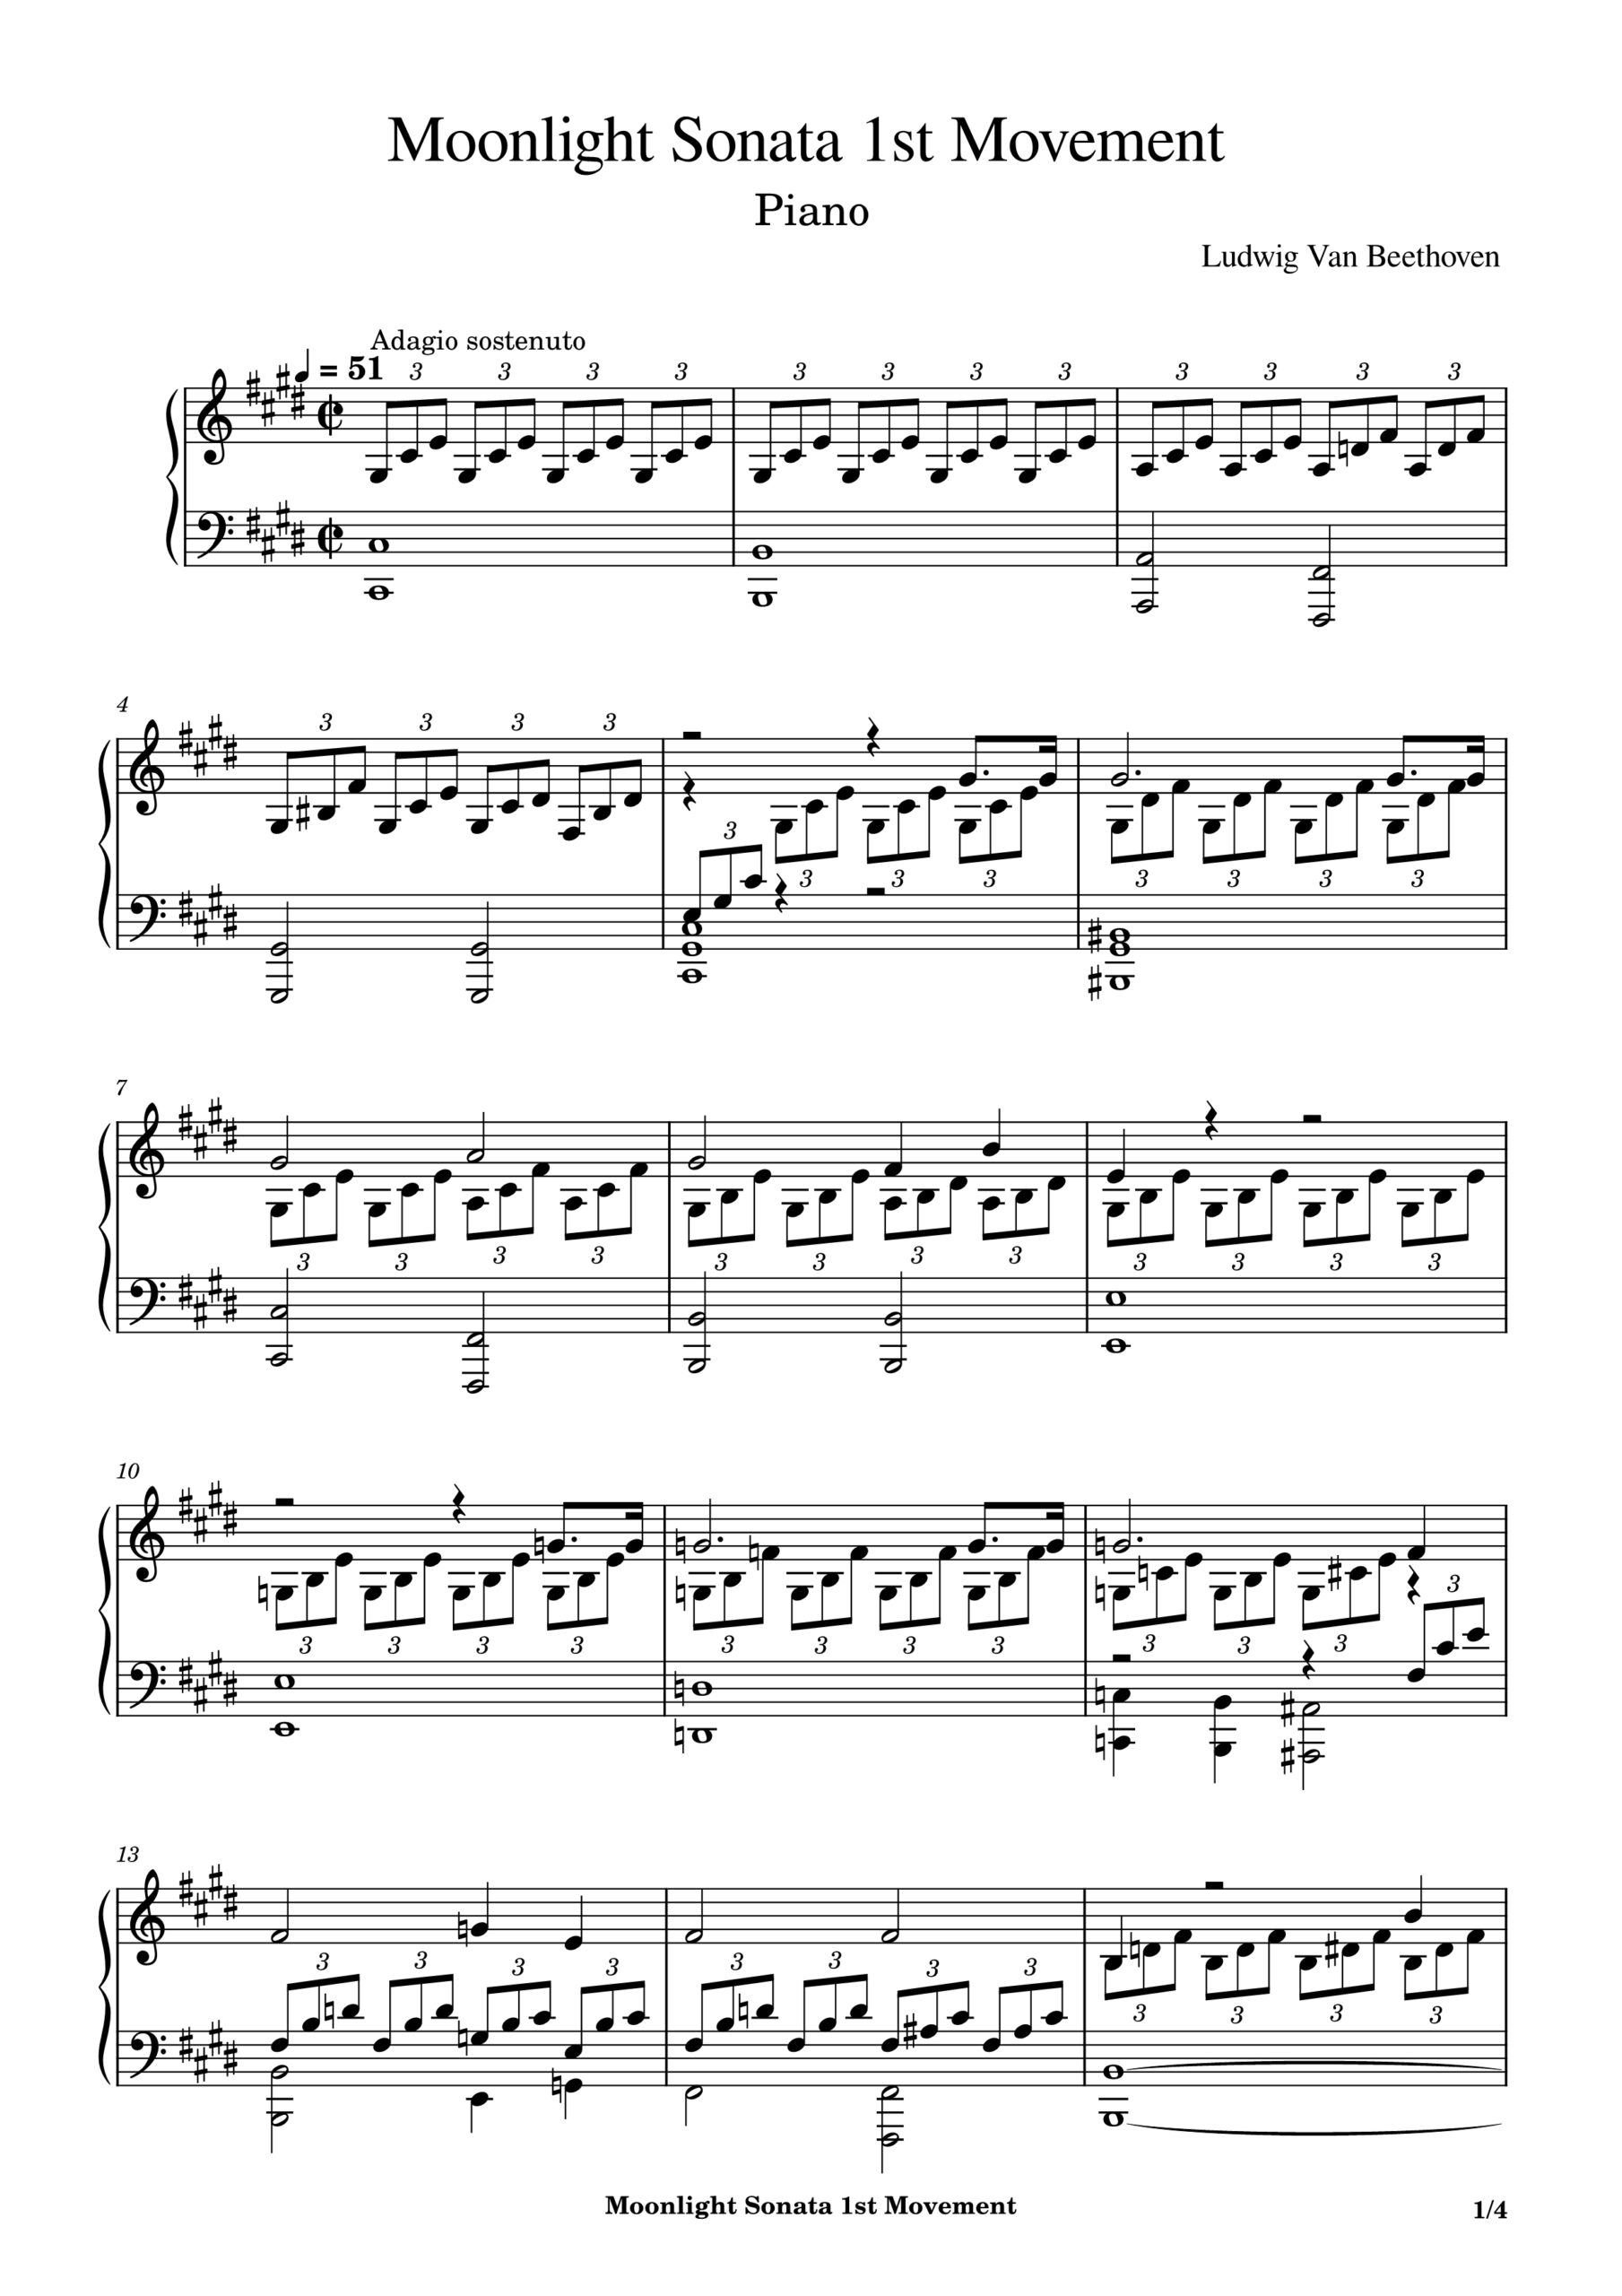 Beethoven, Moonlight Sonata 1st Movement Sheet Music Page 1 of 4